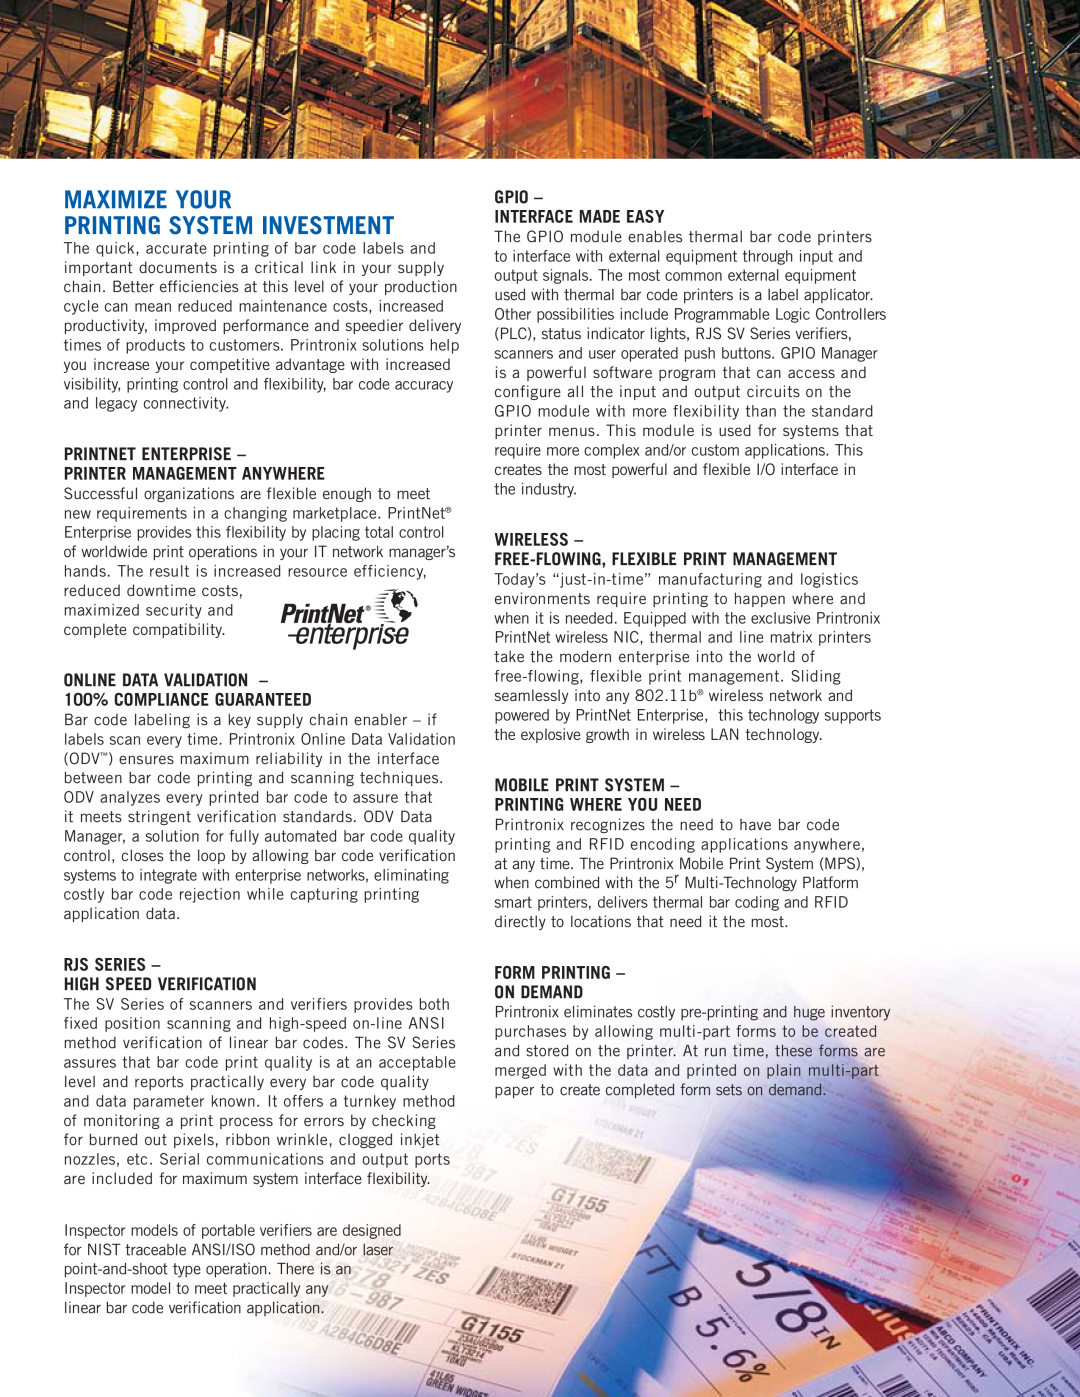 Printronix laser printers manual Maximize Your Printing System Investment, Printnet Enterprise Printer Management Anywhere 